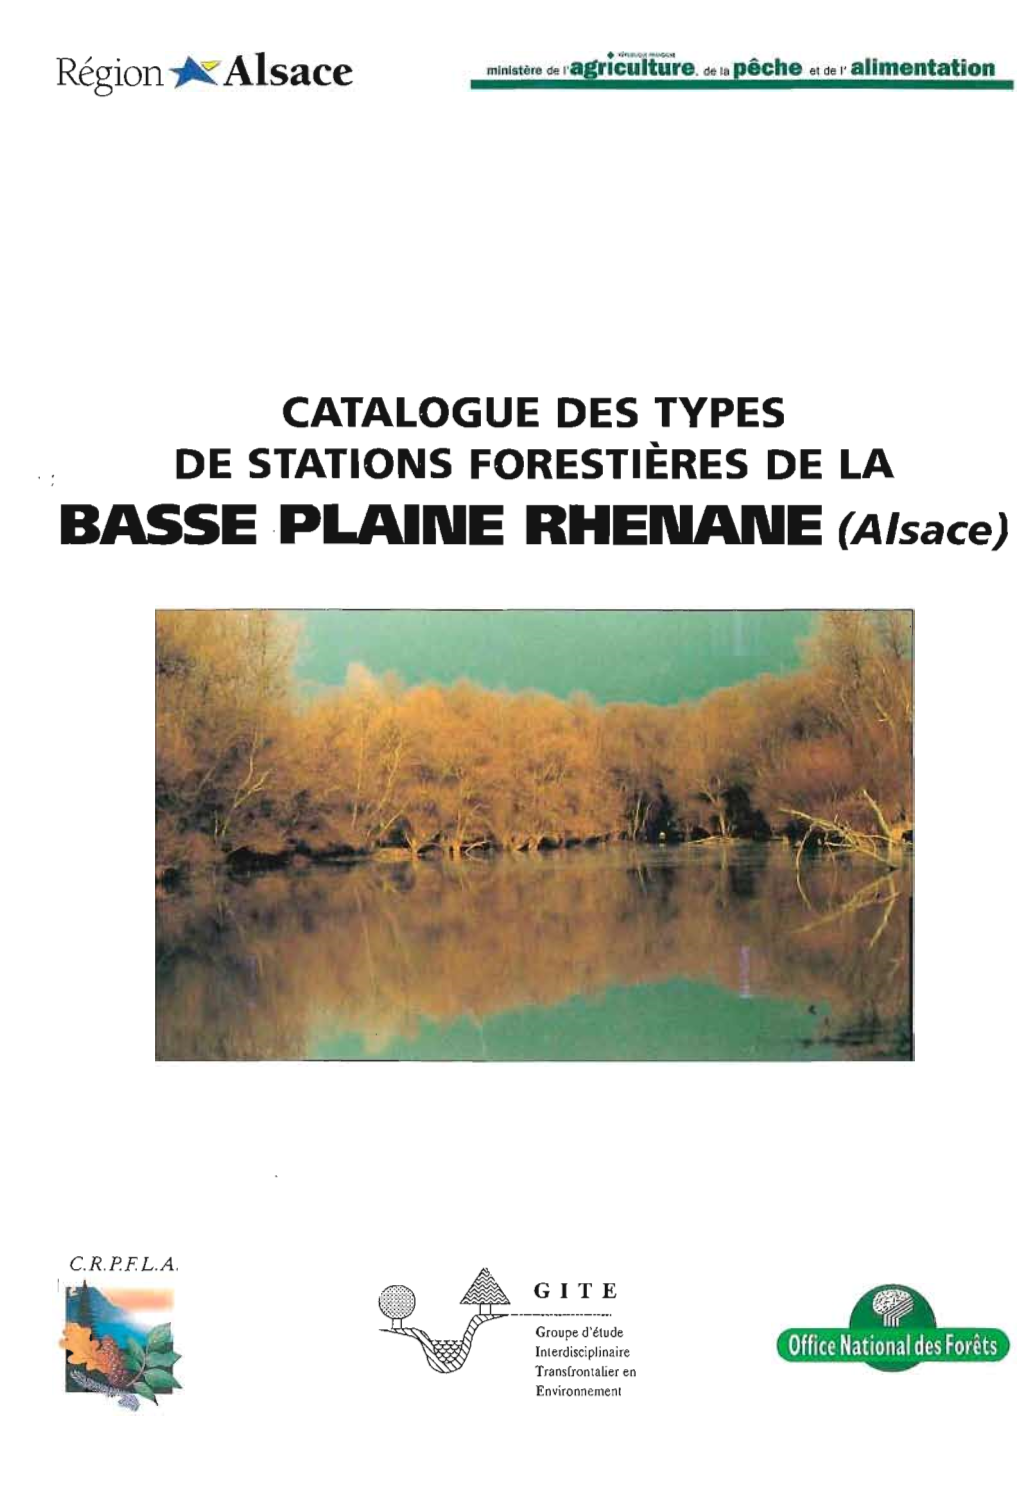 BASSE PLAINE RHENANE (Alsace)